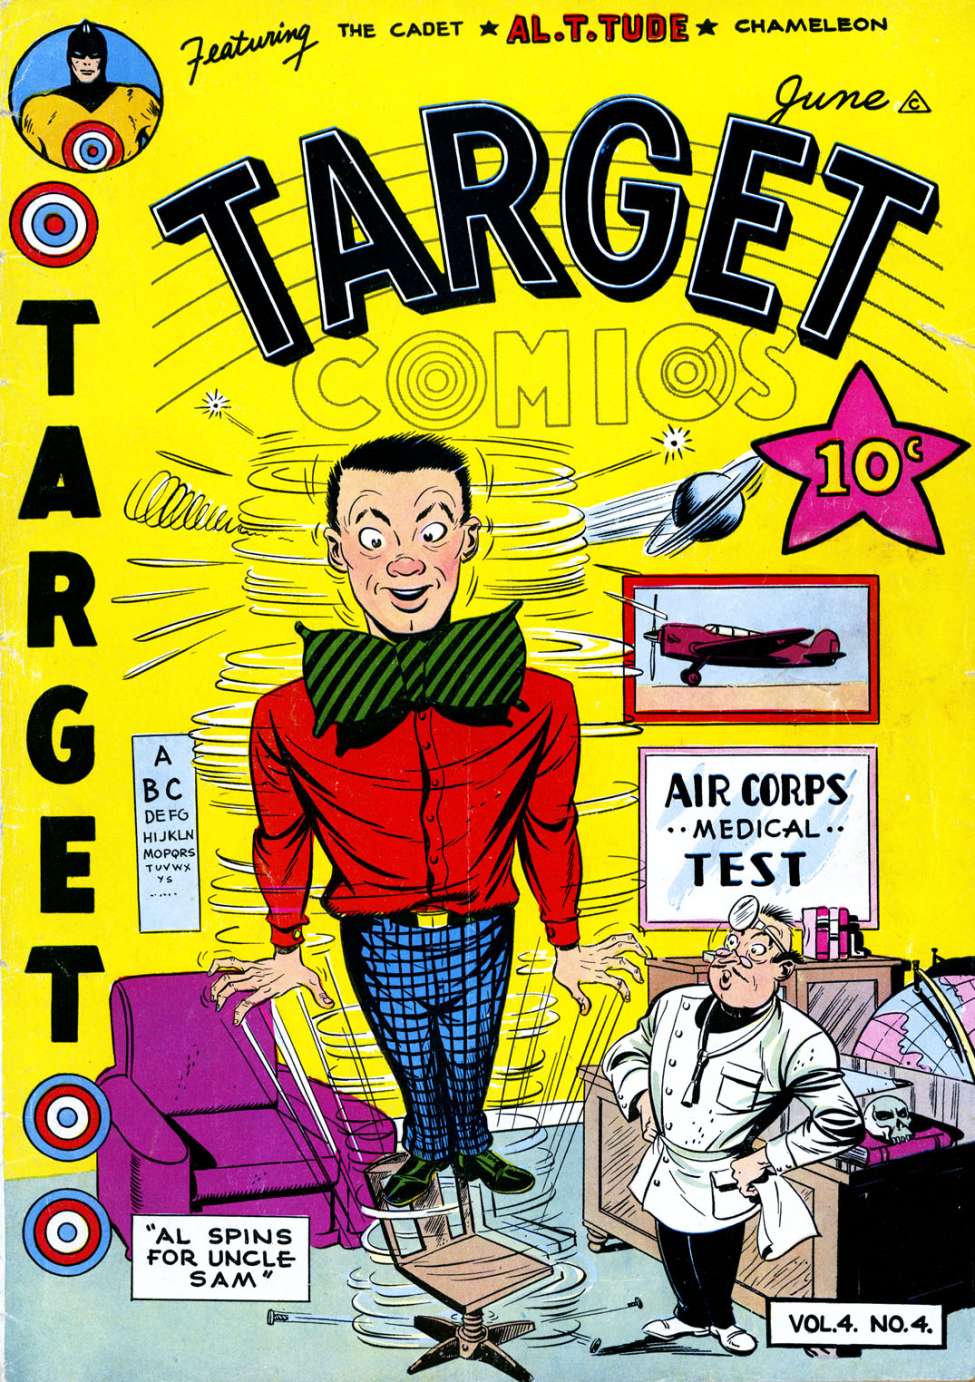 Book Cover For Target Comics v4 4 - Version 2